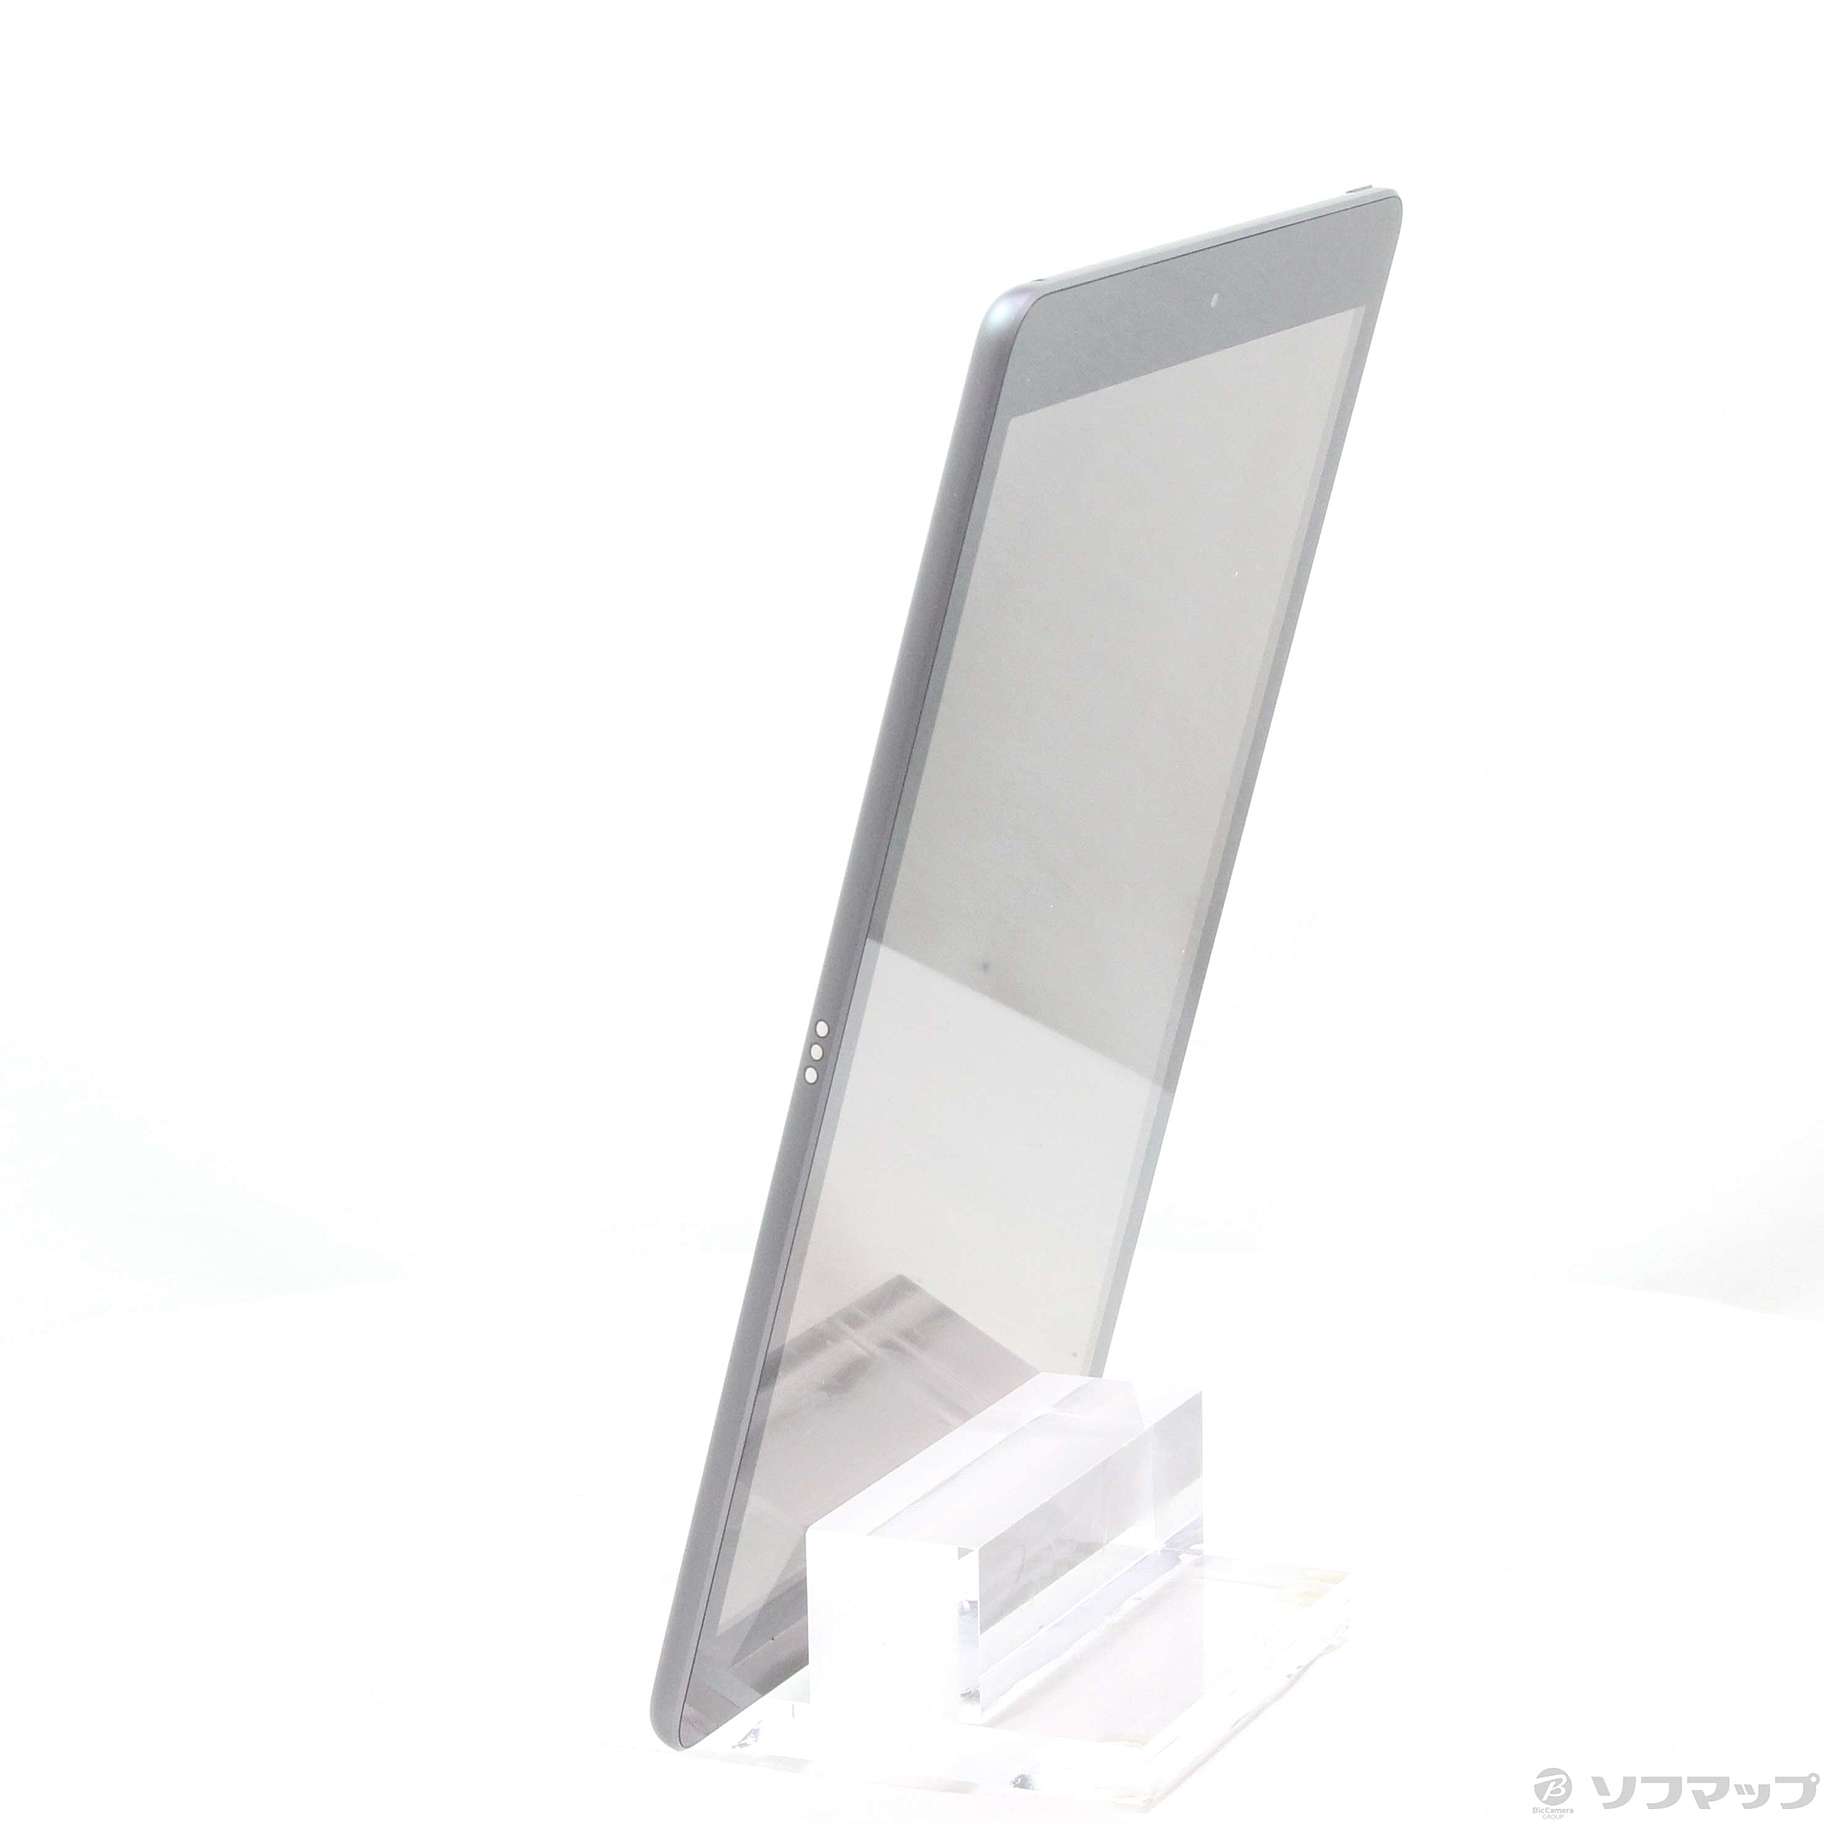 iPad 第8世代 128GB MYLD2J/A スペースグレー